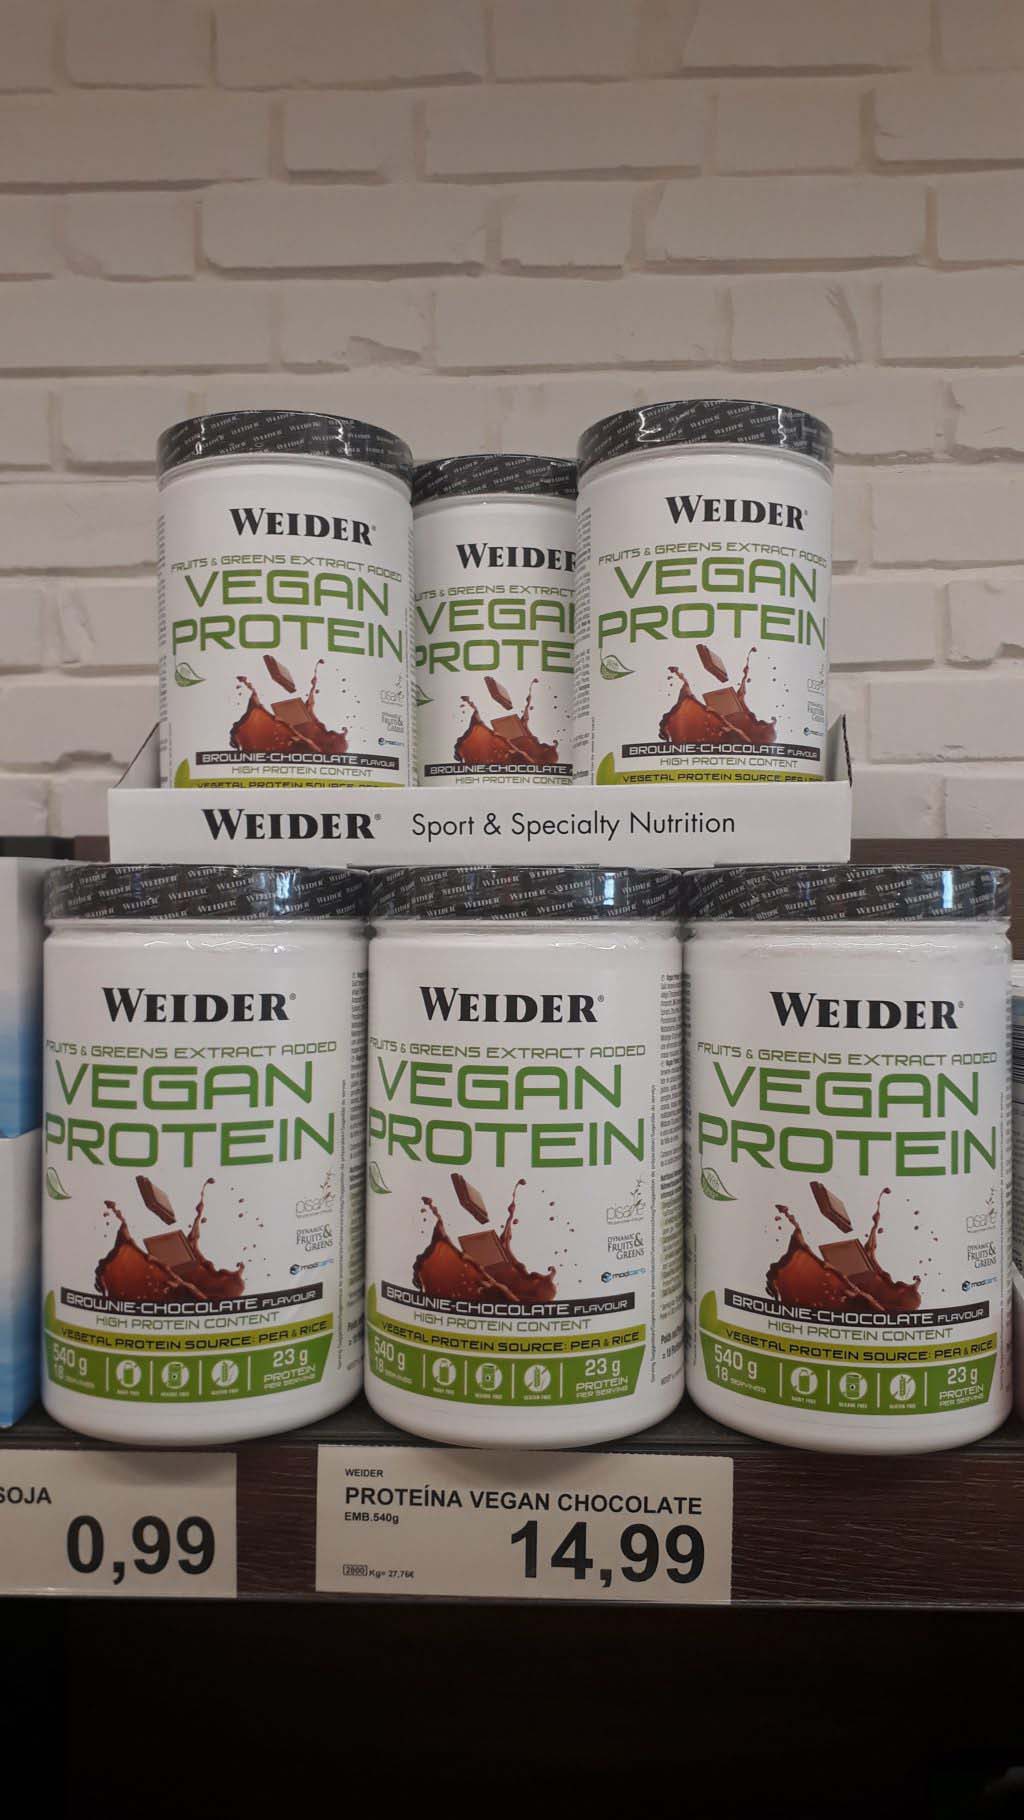 Vegan protein powder from Weider with brownie-chocolate flavor